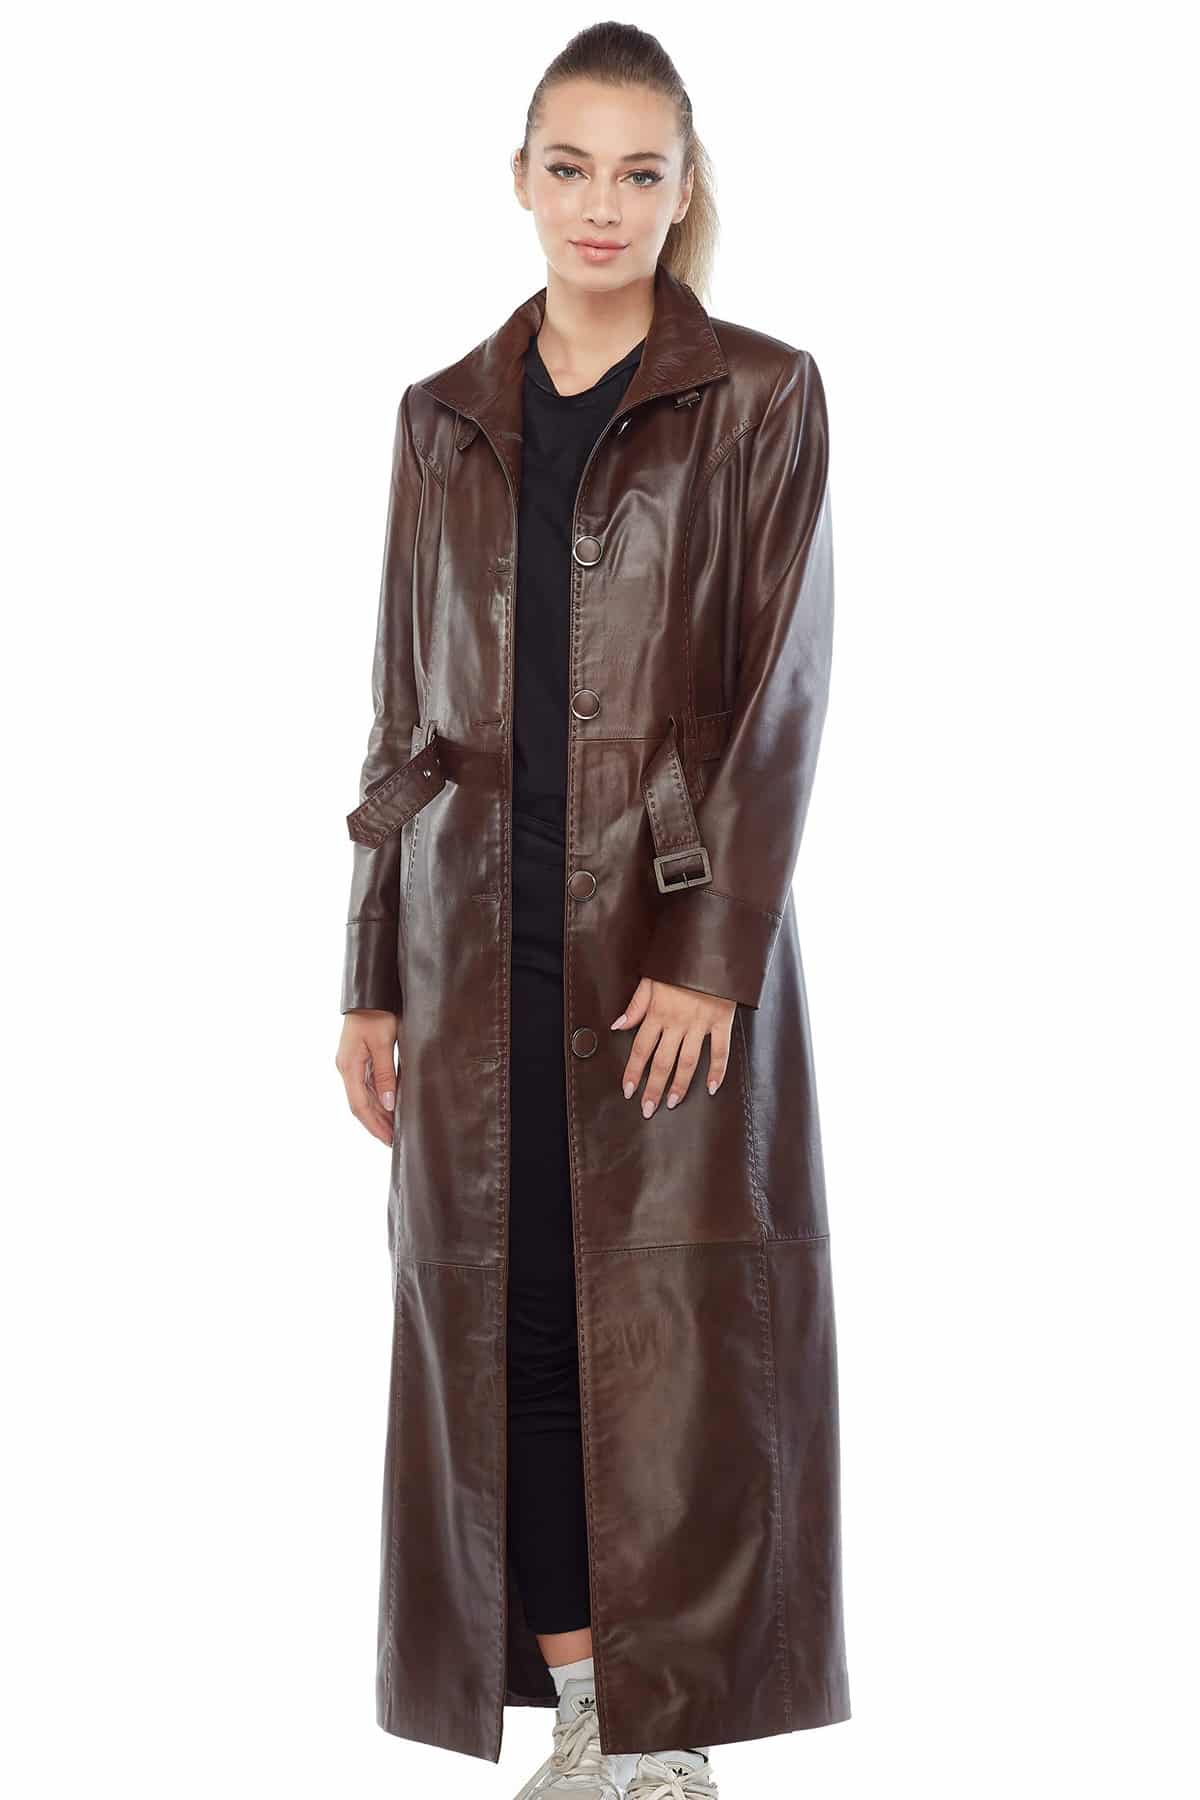 Skyler Women's 100 % Real Brown Leather Long Coat